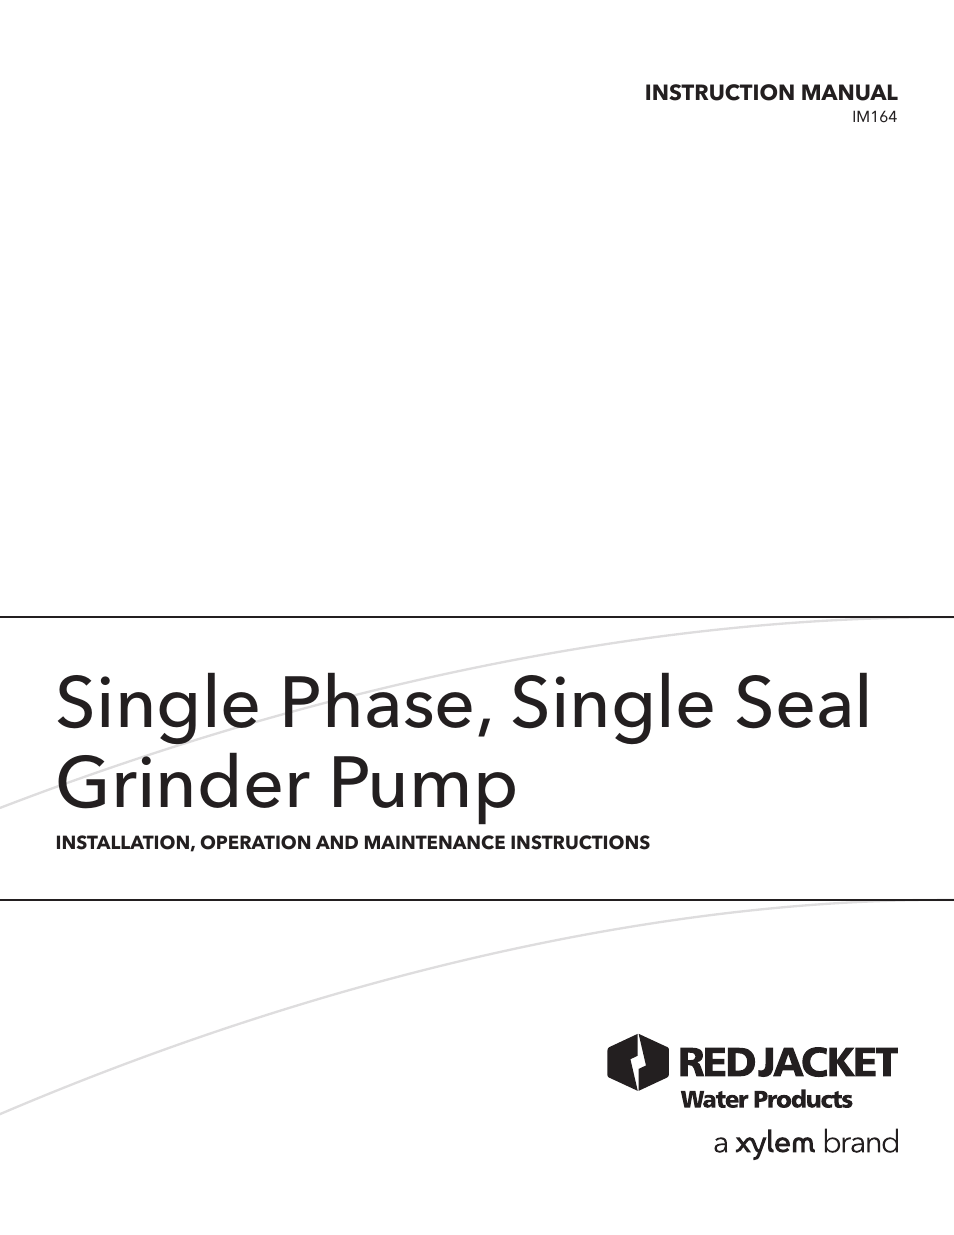 IM164 R01 Single Phase, Single Seal Grinder Pump